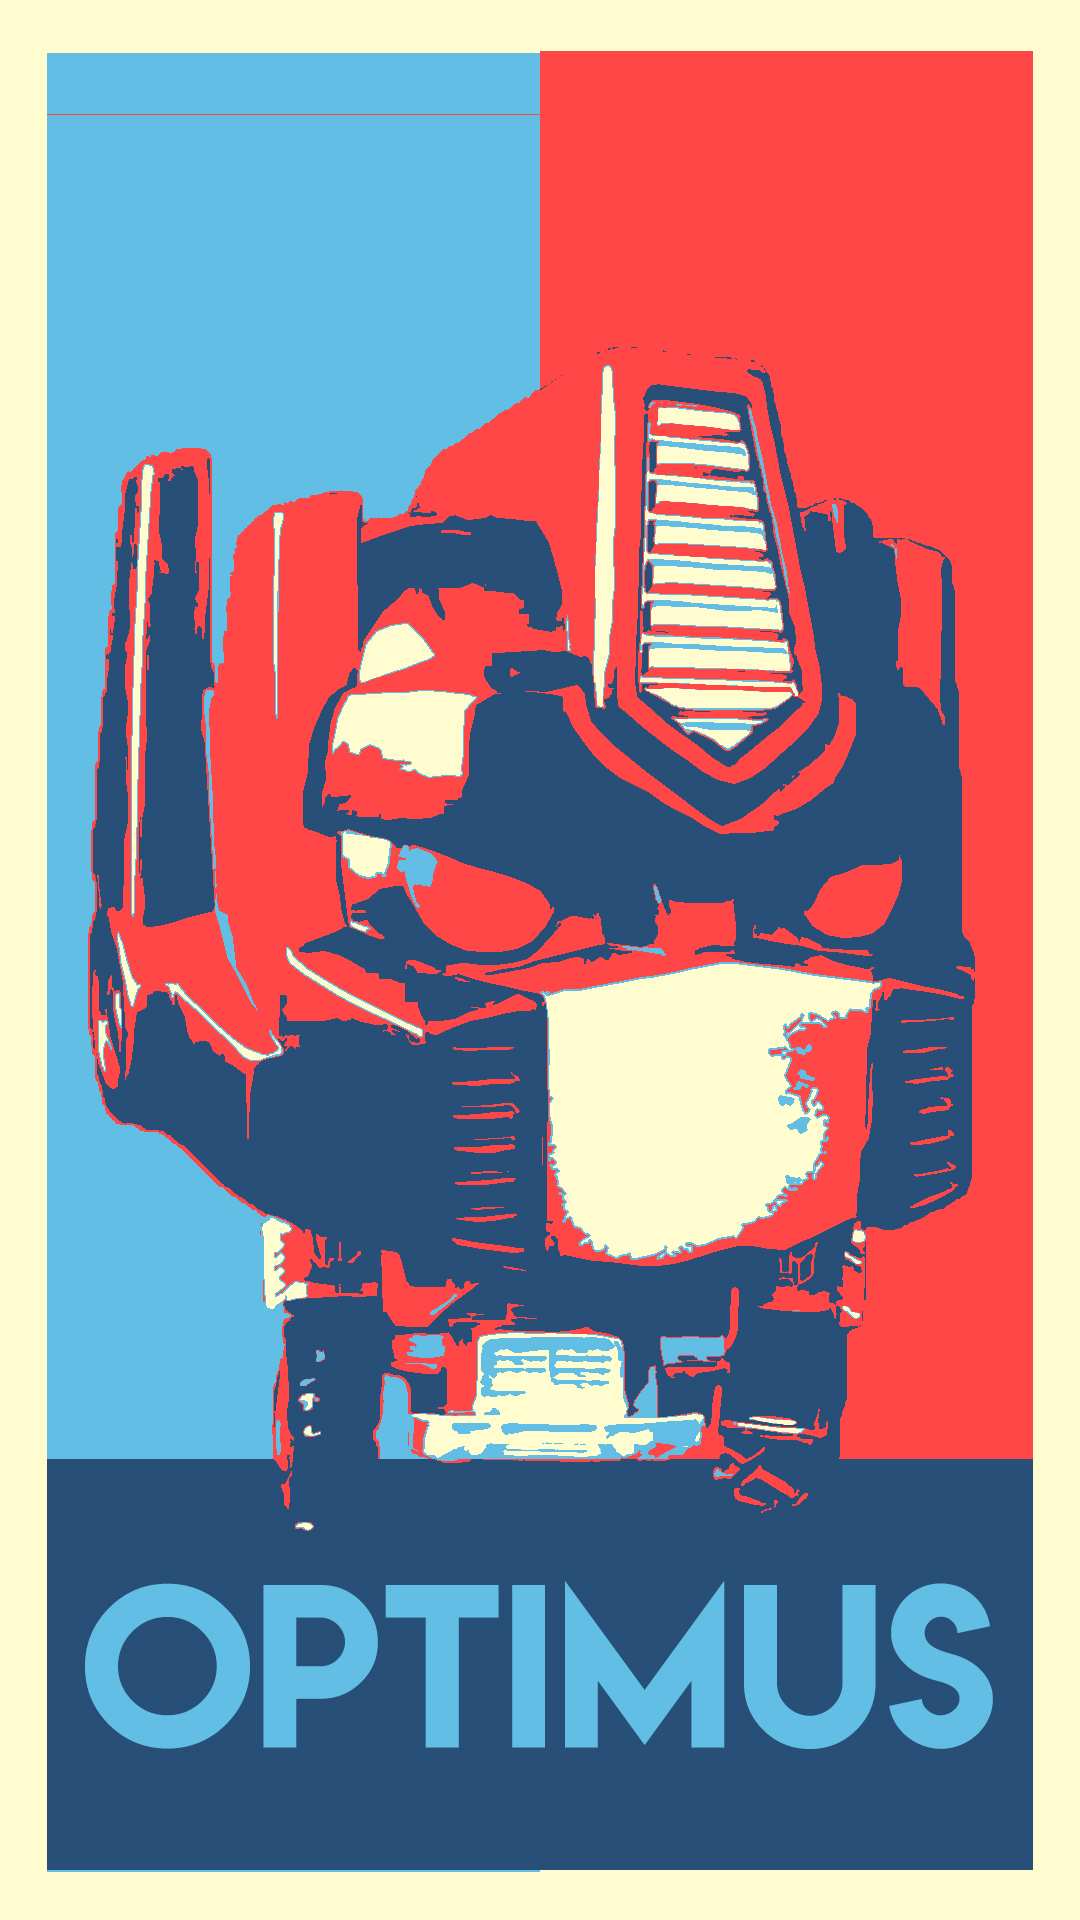 General 1080x1920 Transformers Autobots poster red blue Hasbro Optimus Prime portrait display artwork